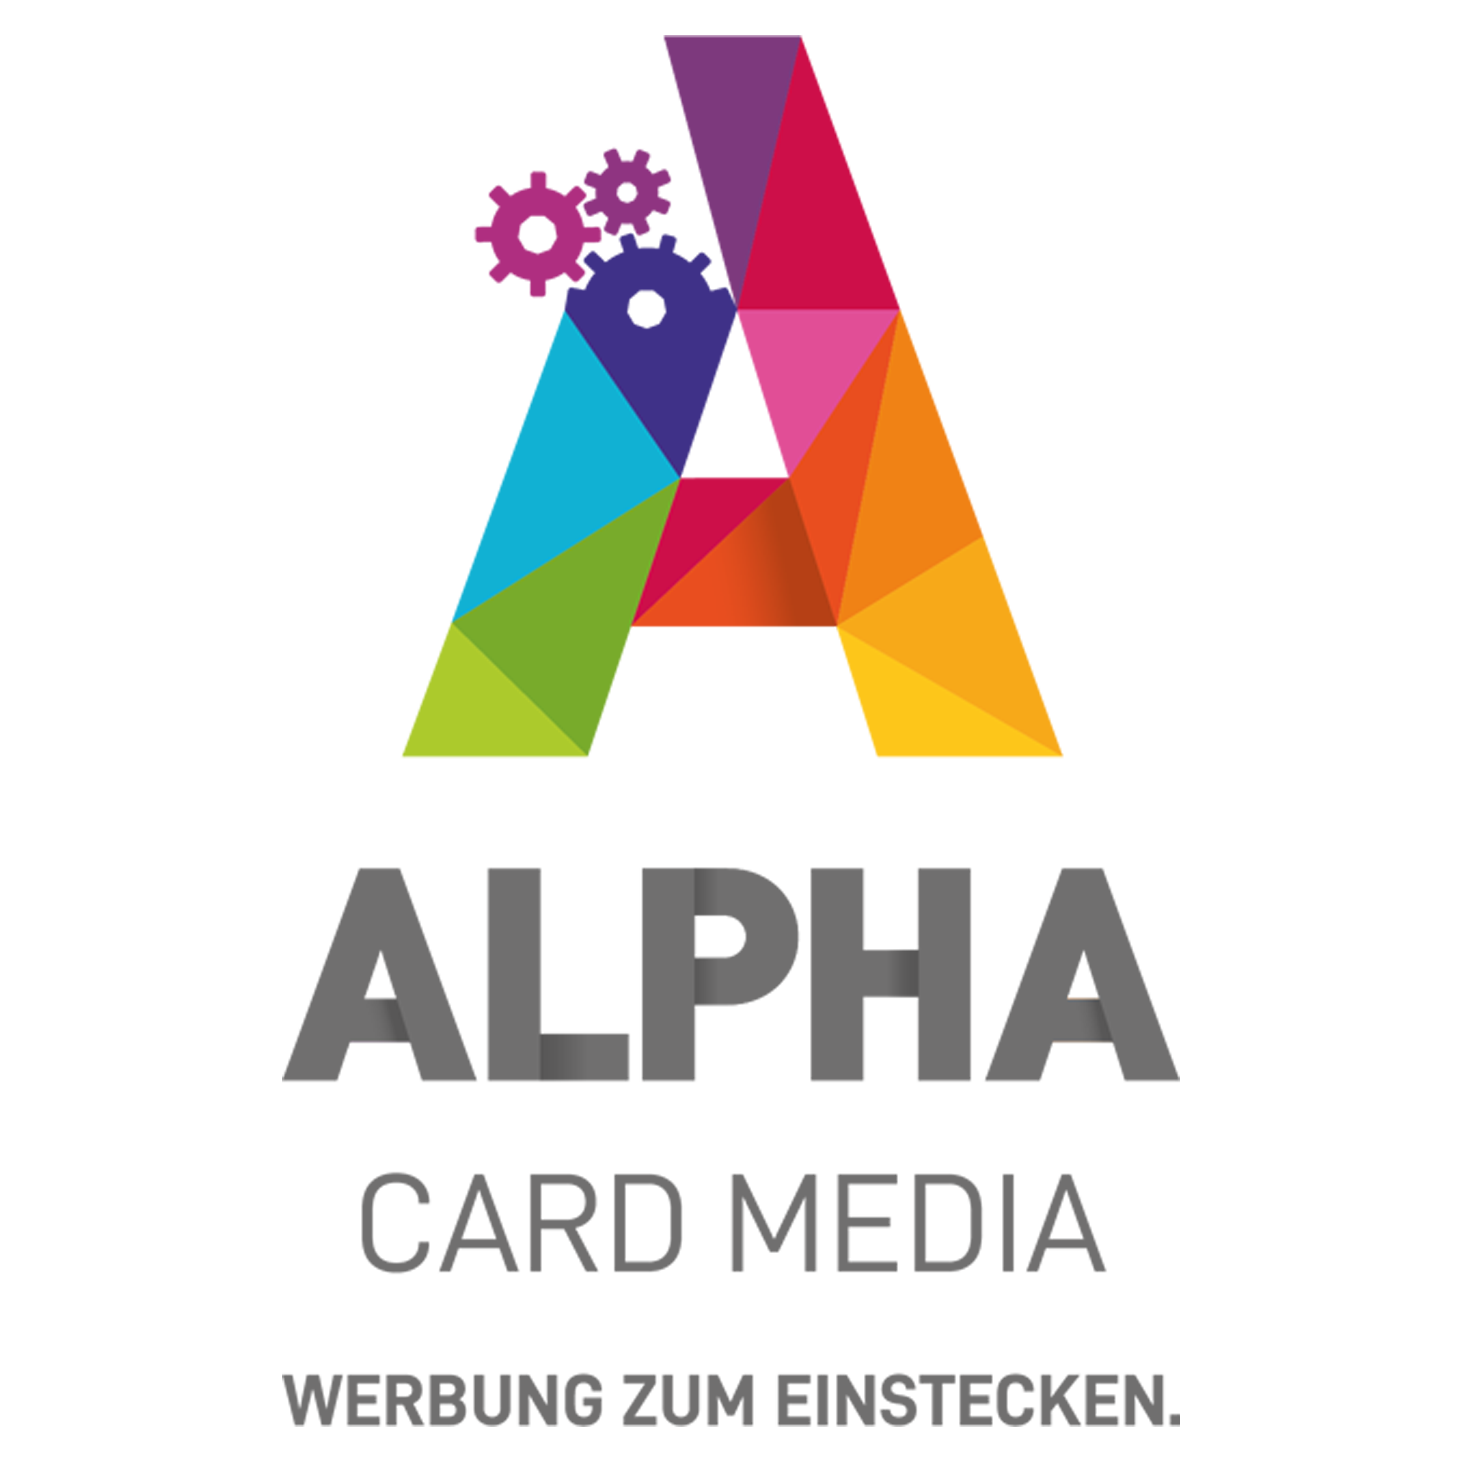 Alpha Card logo